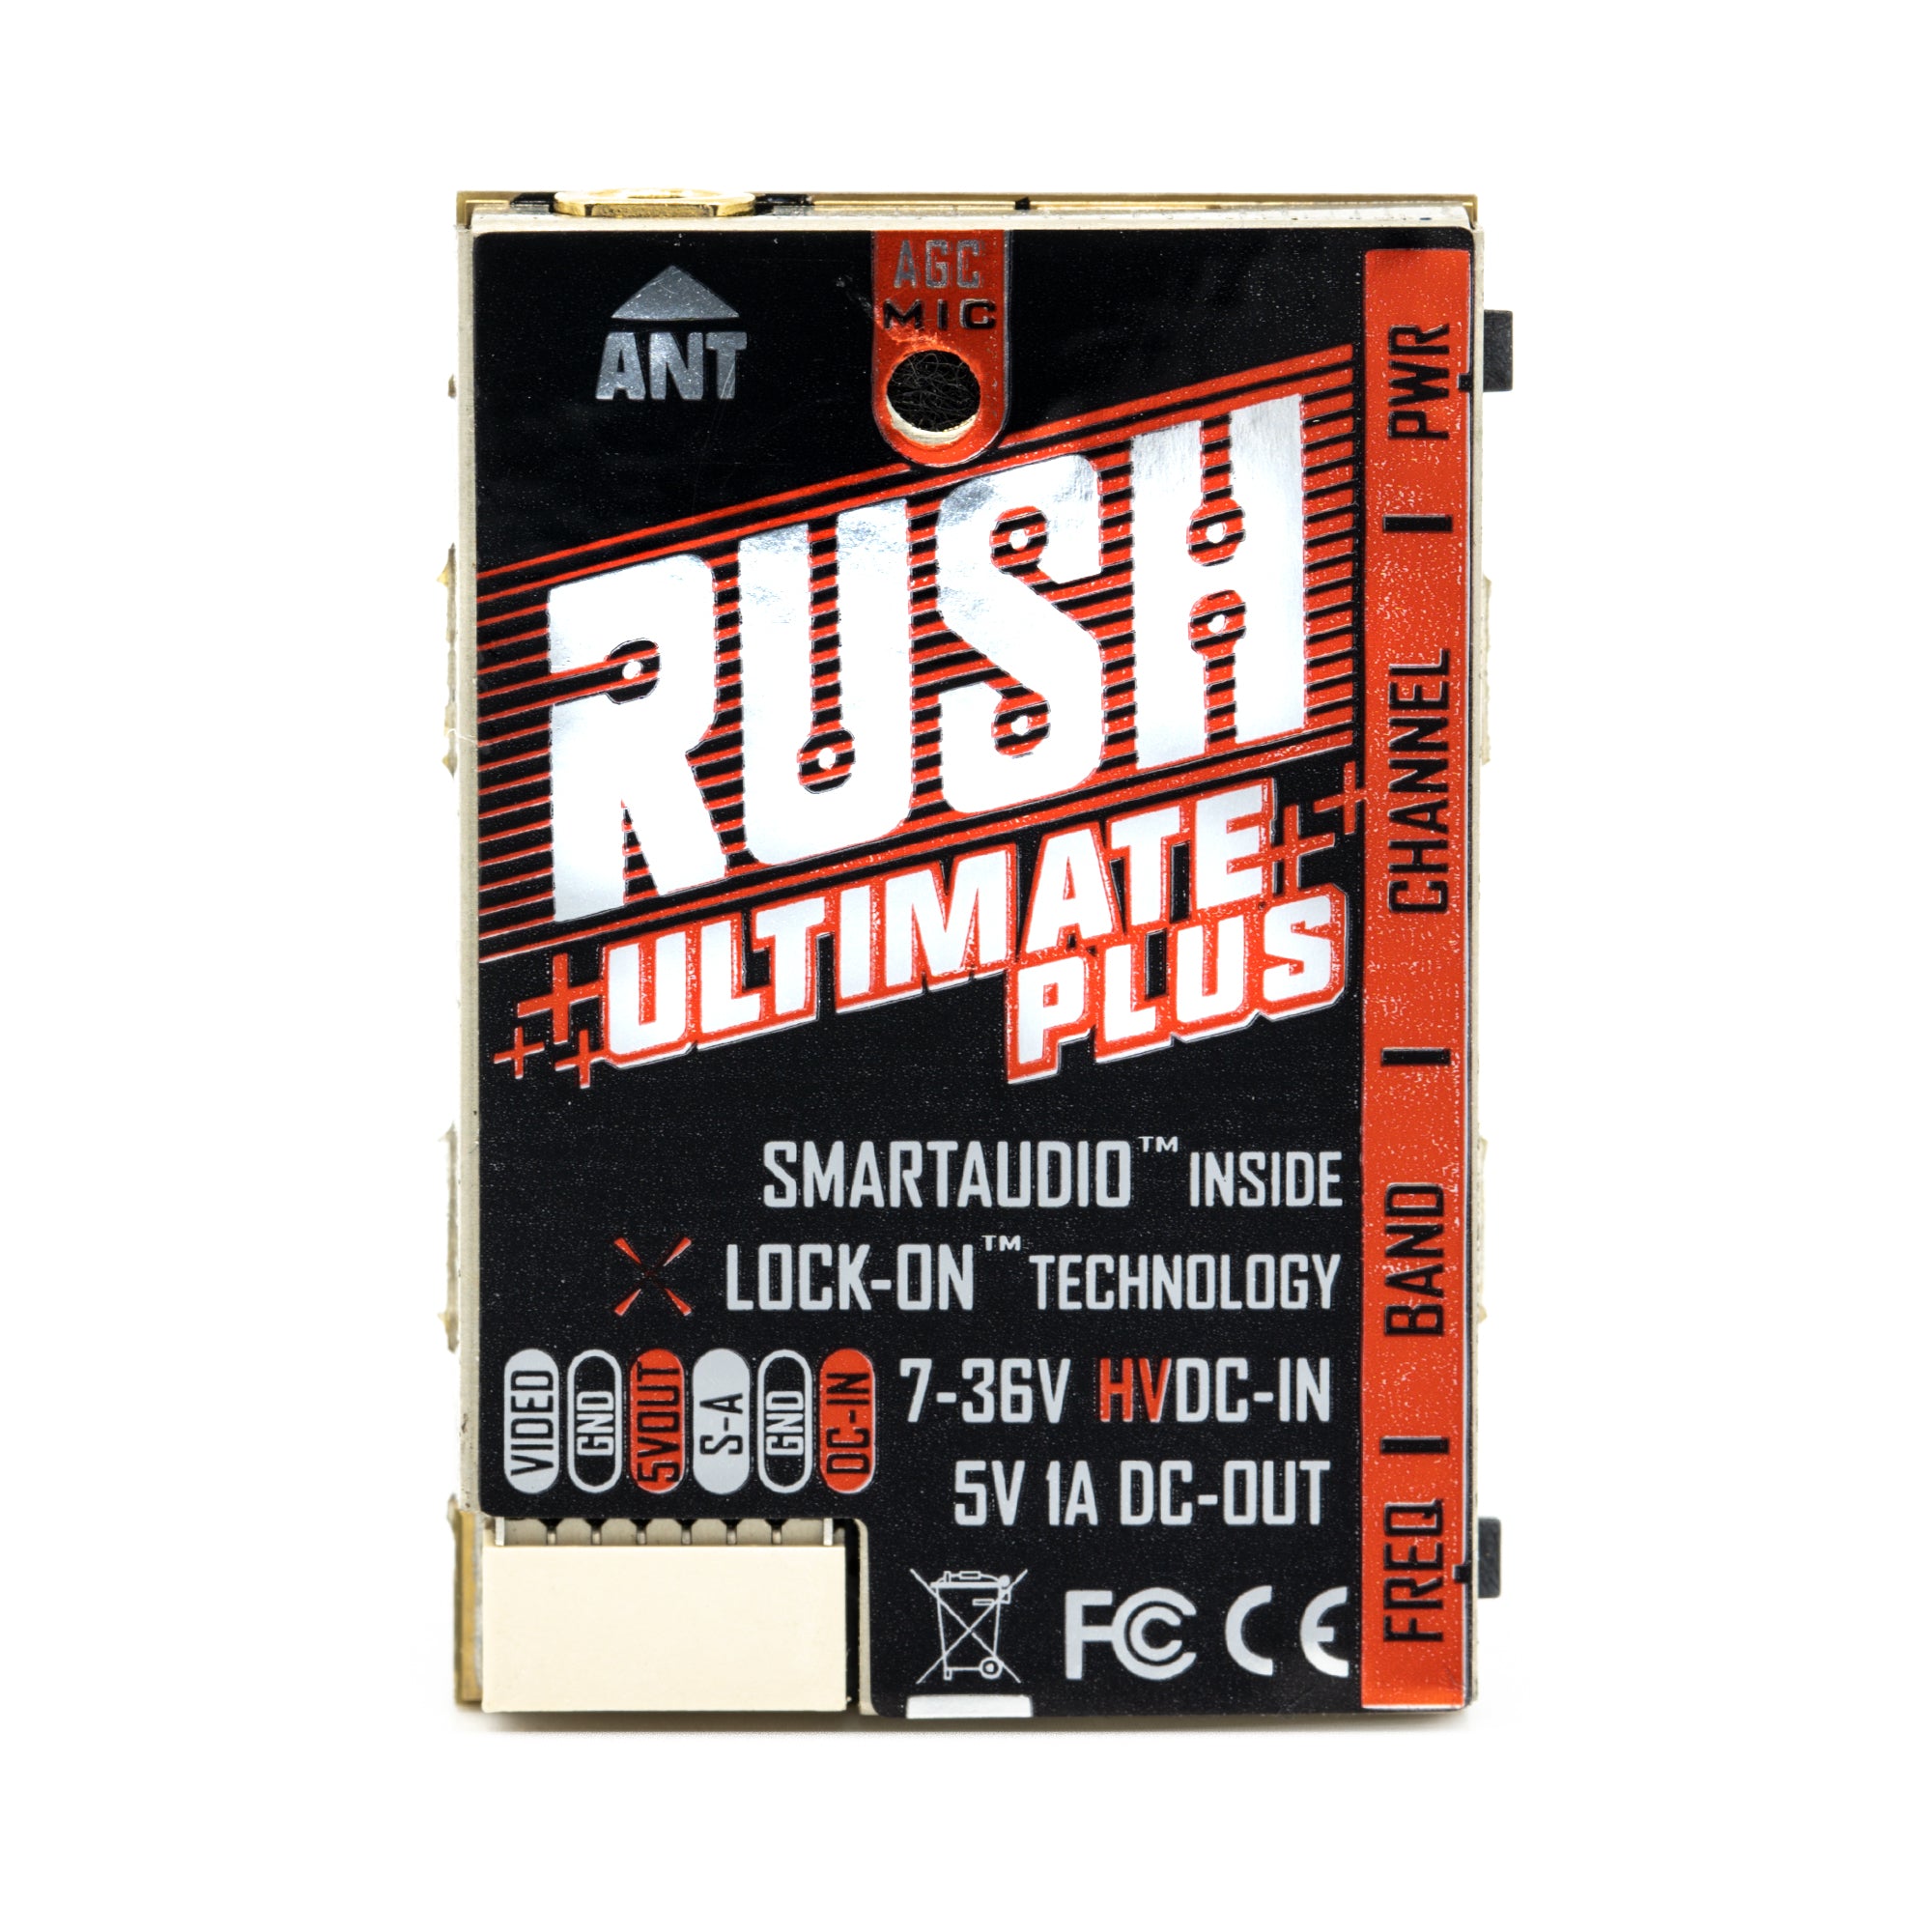 RUSH Tank Ultimate Plus 5.8GHz VTX w/ Smart Audio